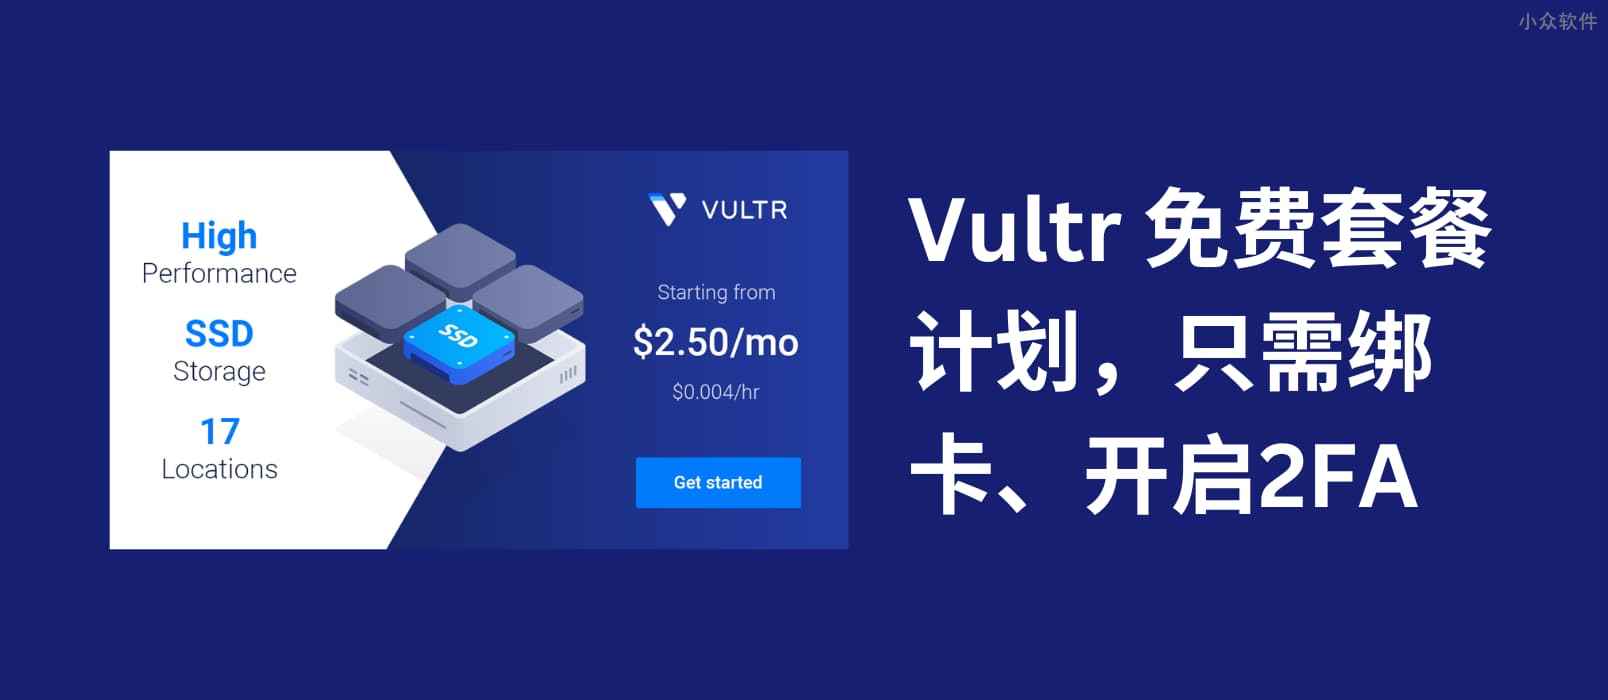 Vultr 推出免费套餐计划，只需绑卡、2FA 即可申请 1